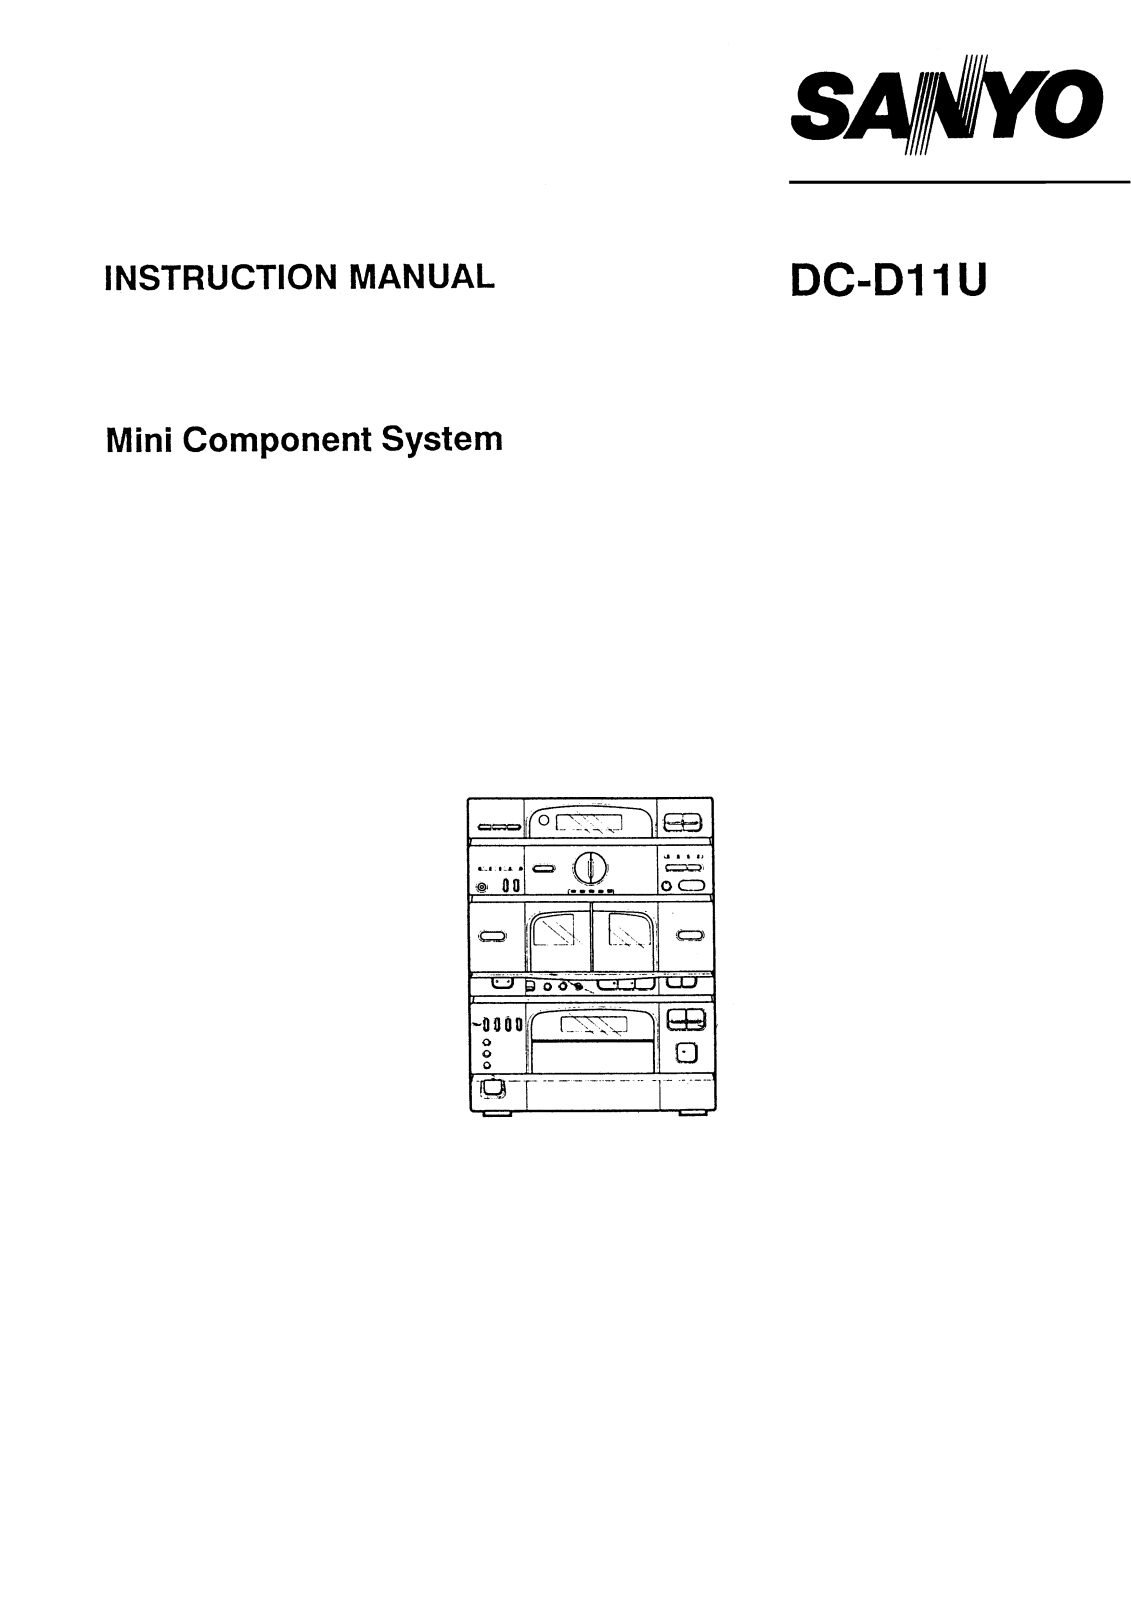 Sanyo DC-D11U Instruction Manual